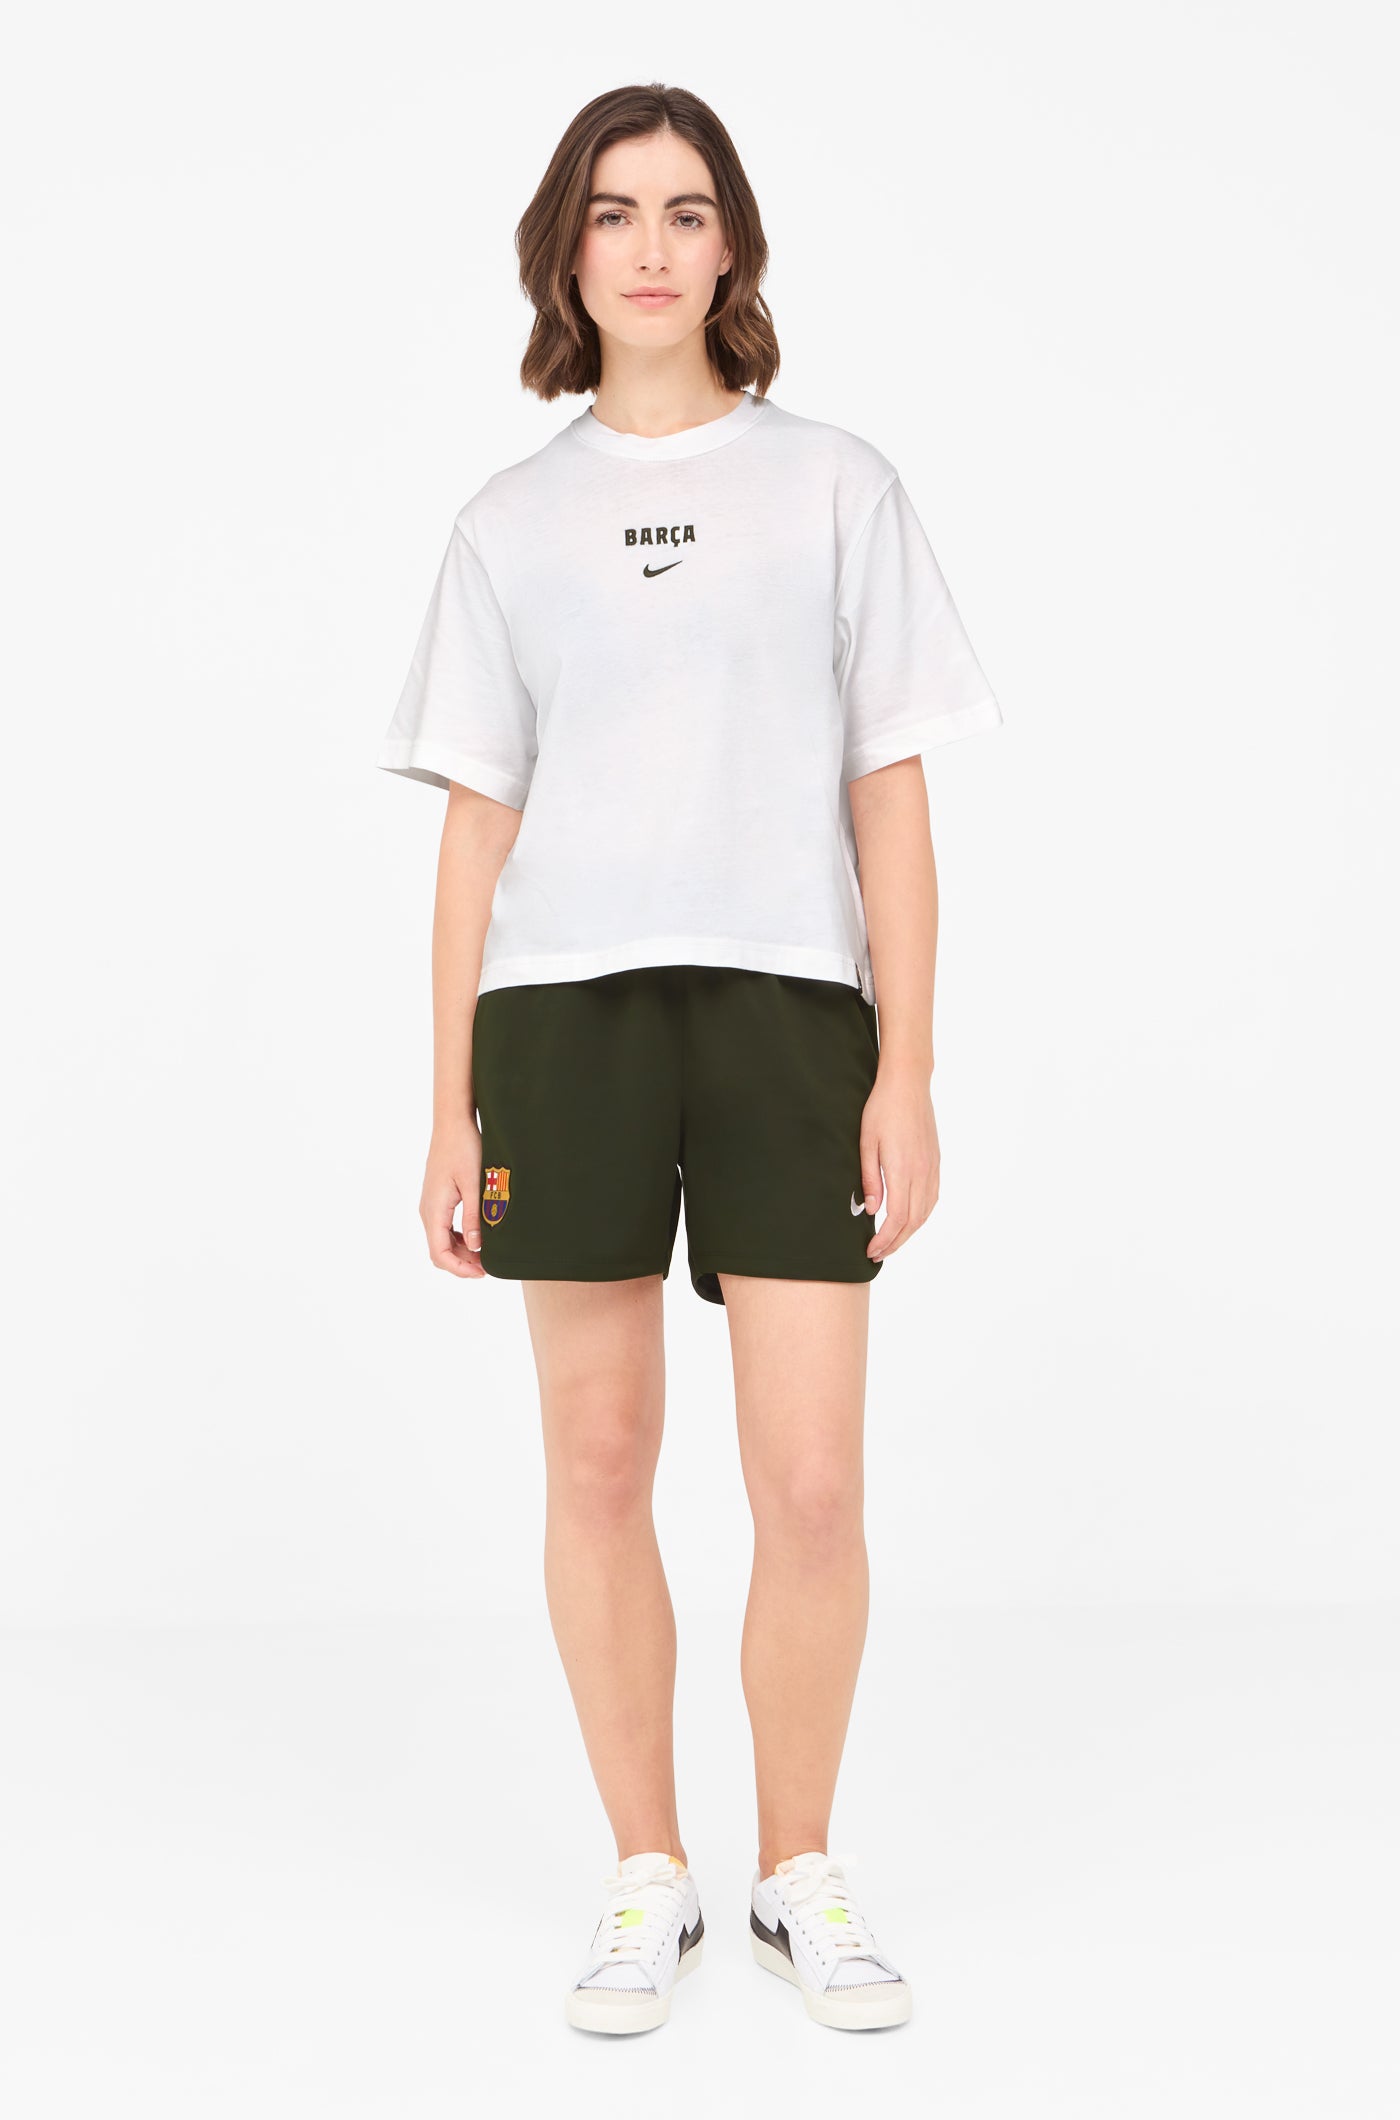 Camiseta manga corta blanca Barça Nike - Mujer